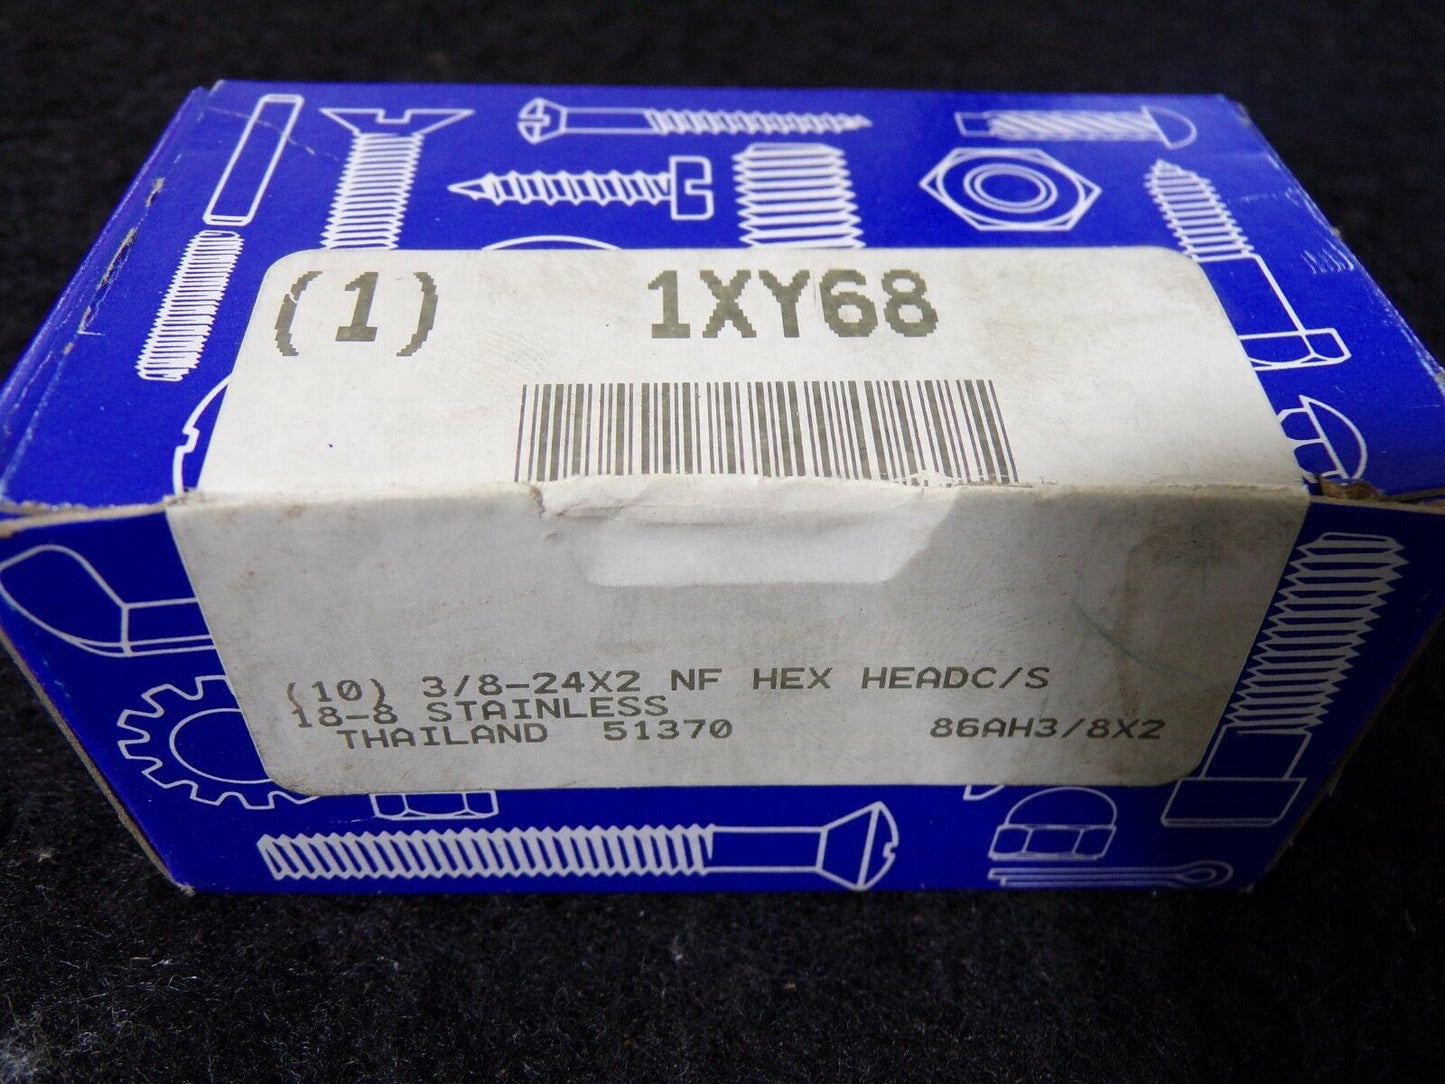 3/8-24 x 2" Hex Head Cap Screw Stainless Steel QTY-10 1XY68 (183407392474-Y13 (D))